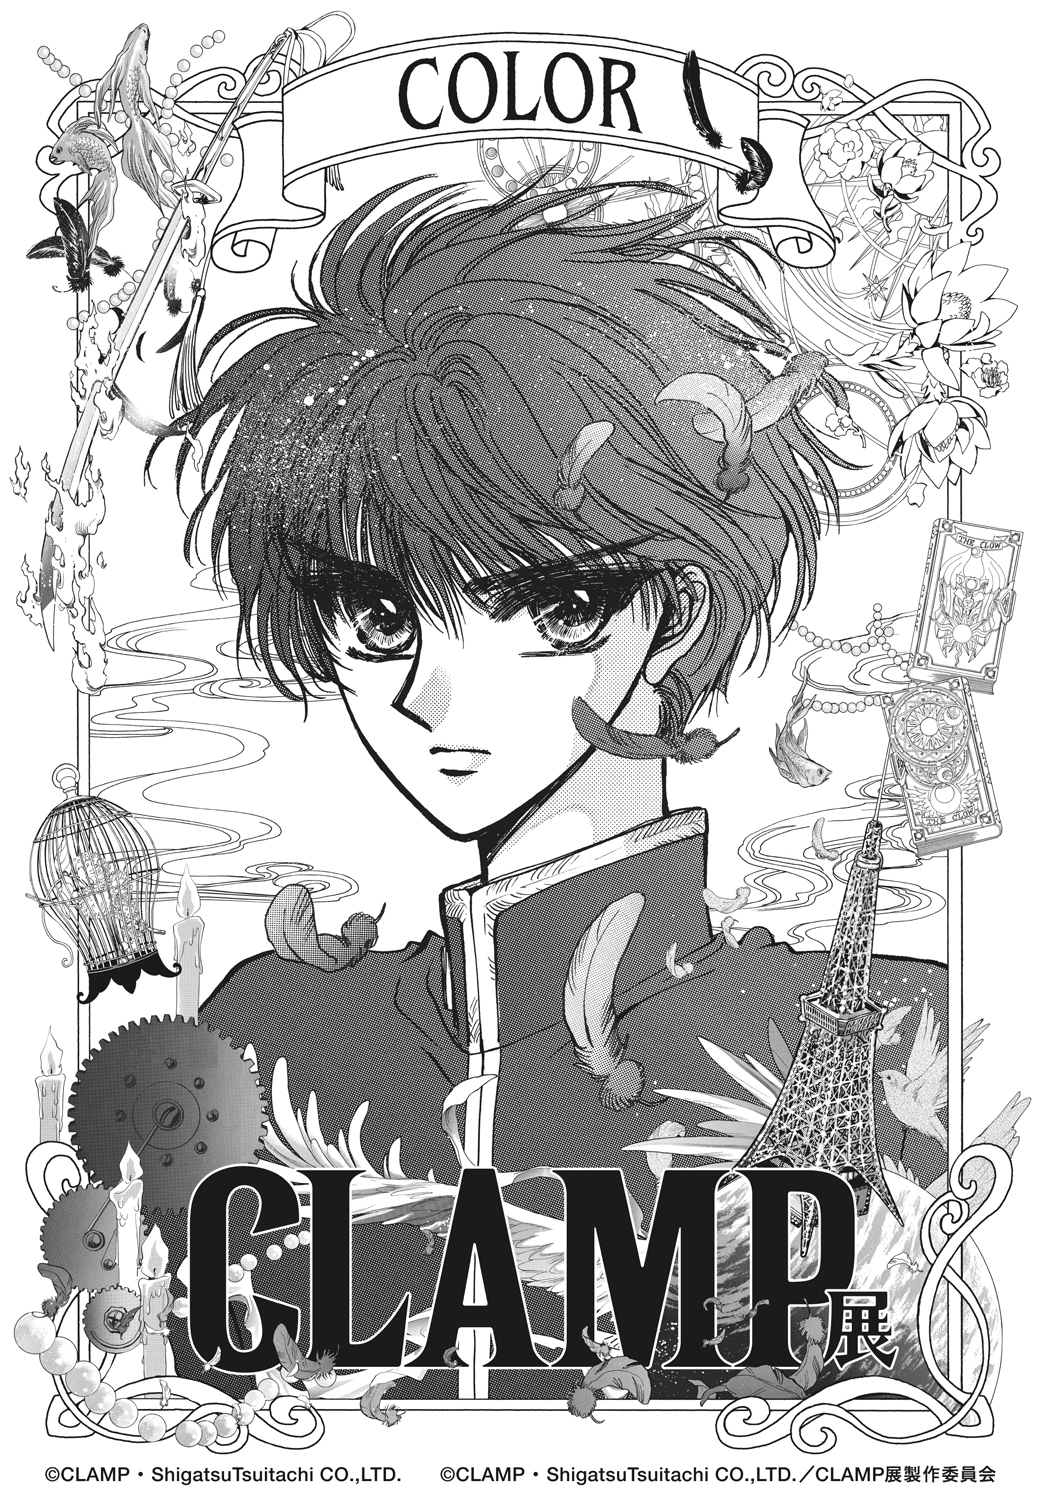 CLAMP展 | 「C」は、COLOR。CLAMPが、世界を彩る。 | ©CLAMP・ShigatsuTsuitachi CO.,LTD. ©CLAMP・ShigatsuTsuitachi CO.,LTD. / CLAMP展製作委員会